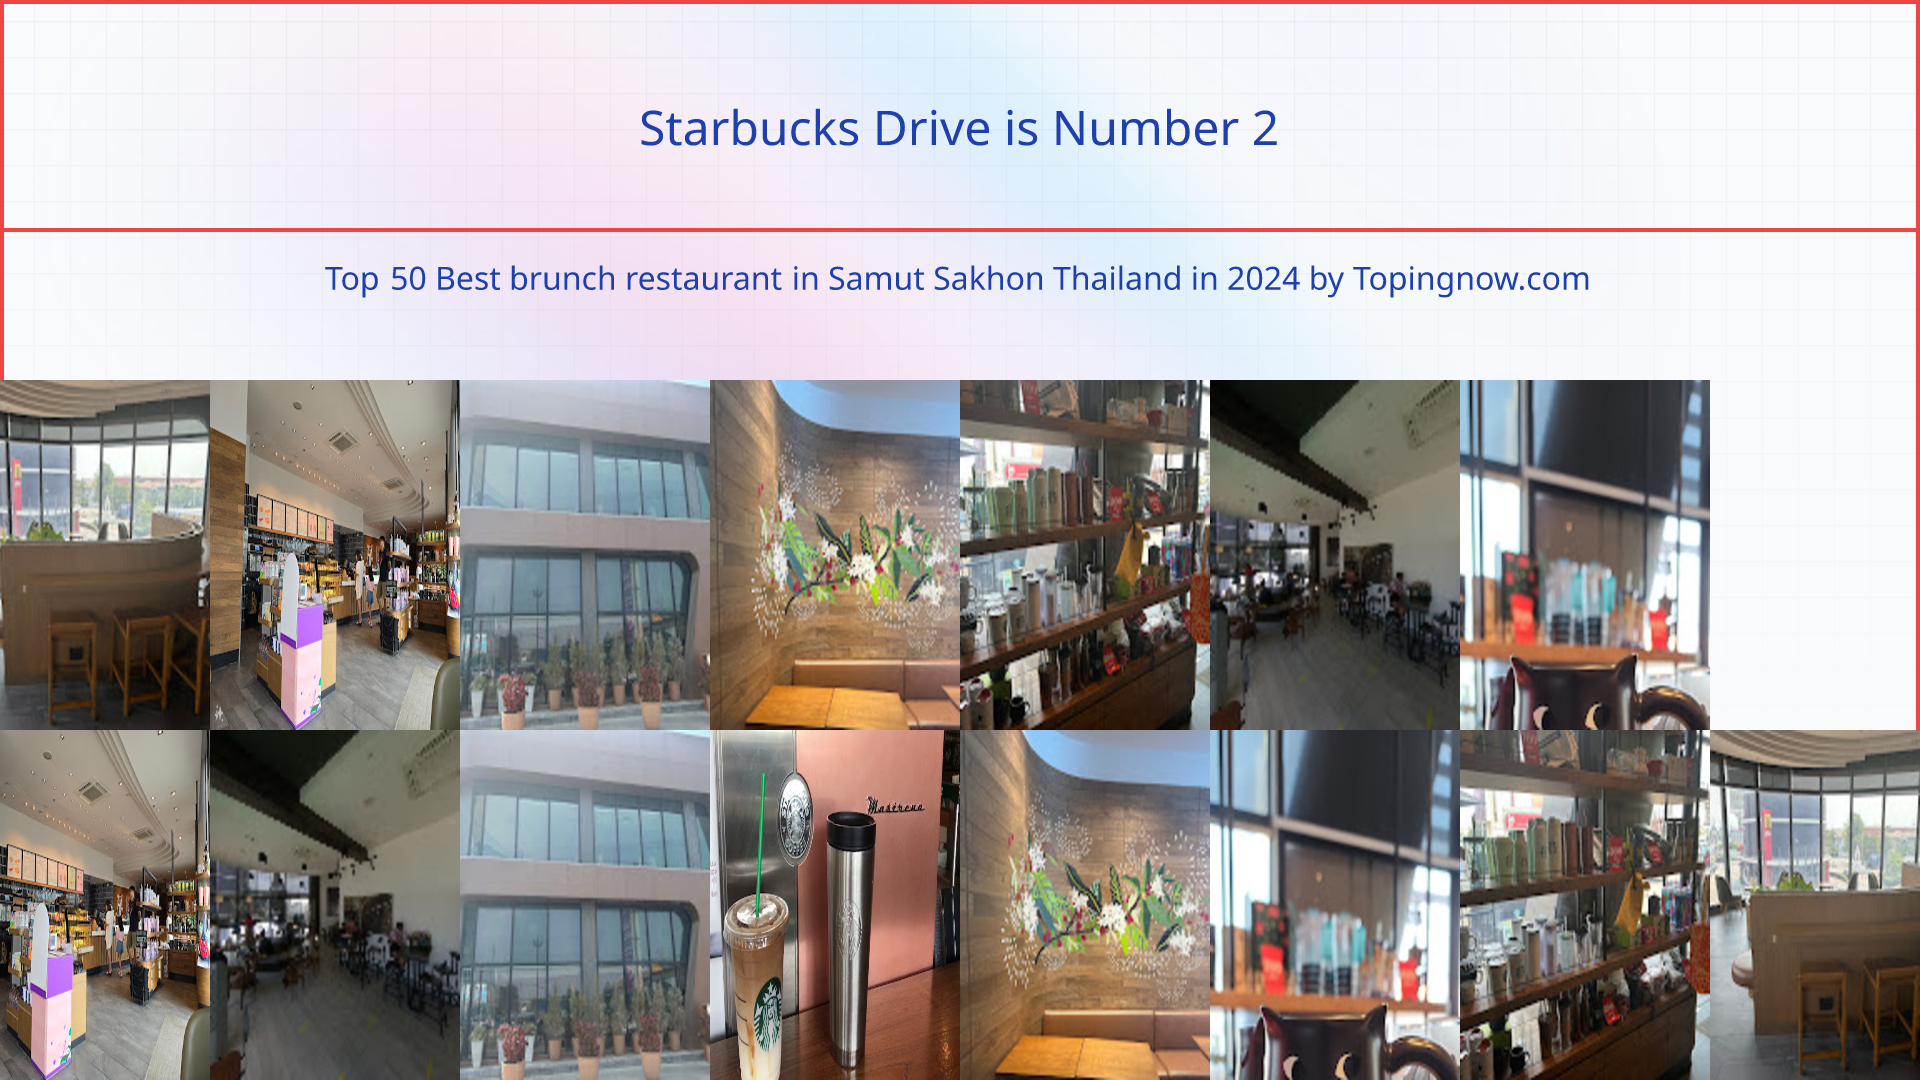 Starbucks Drive: Top 50 Best brunch restaurant in Samut Sakhon Thailand in 2024